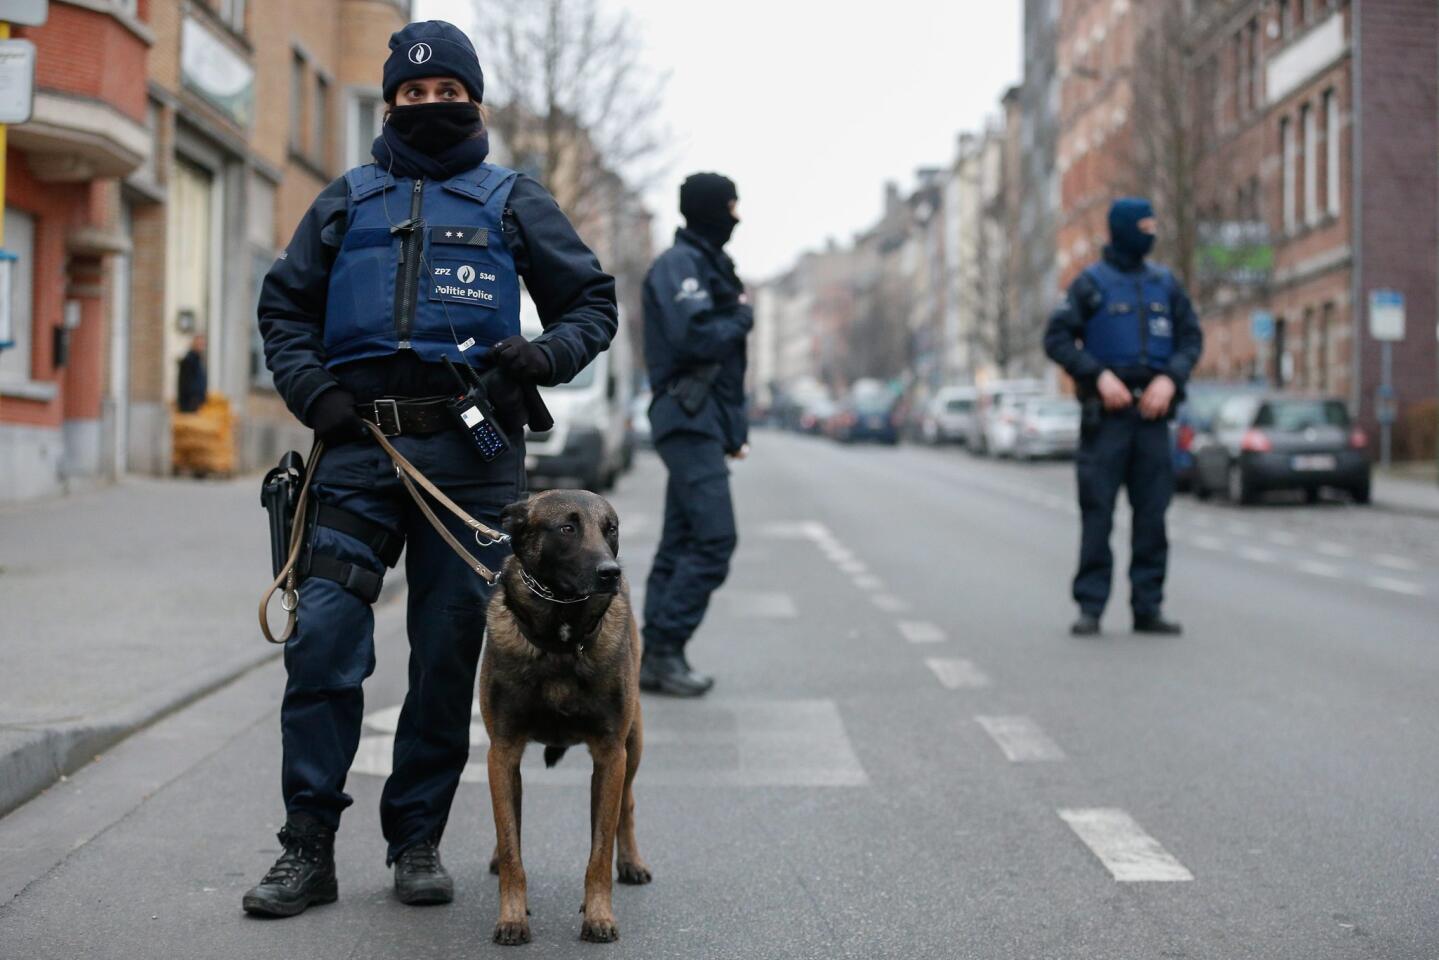 Brussels raid